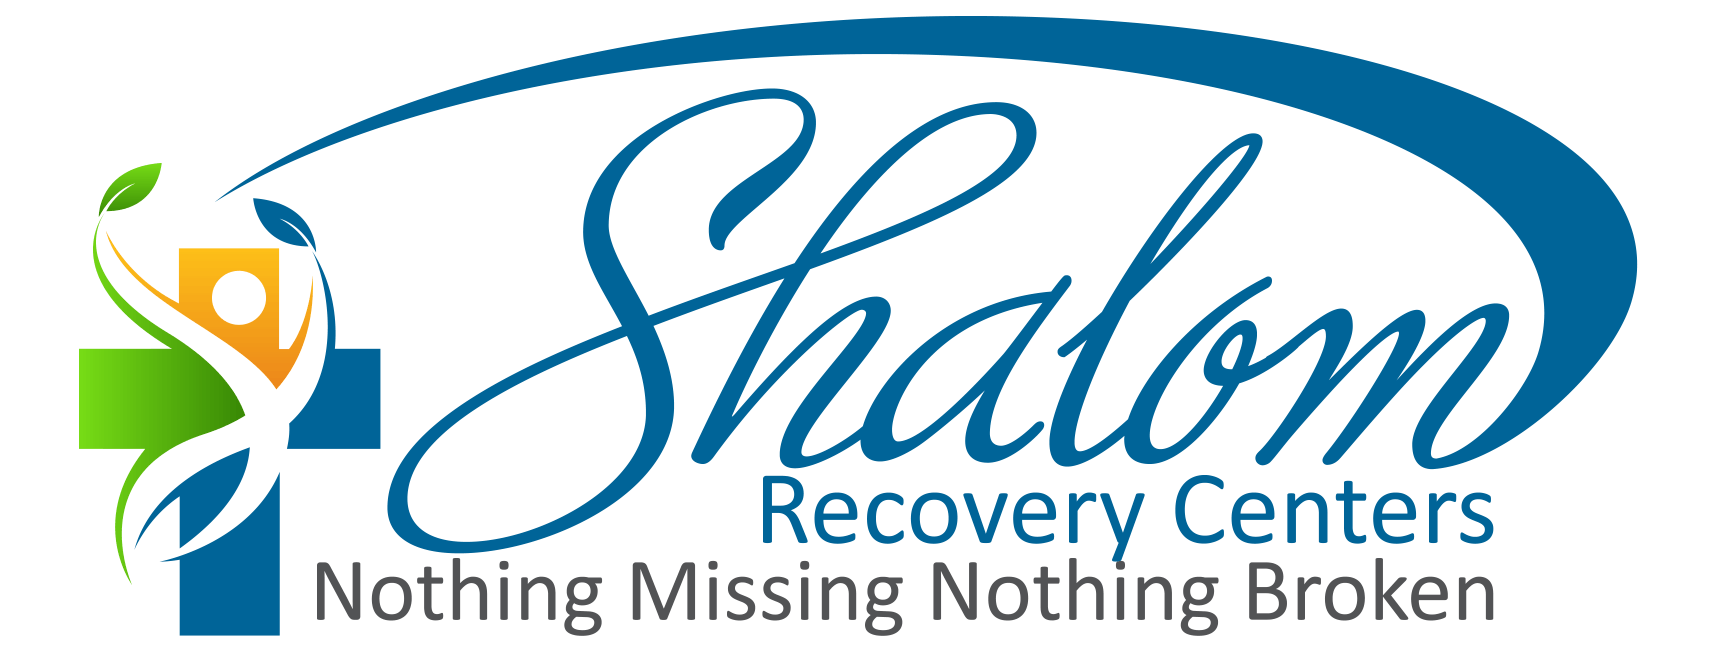 Shalom Logo - Shalom Recovery Centers – Nothing Missing Nothing Broken